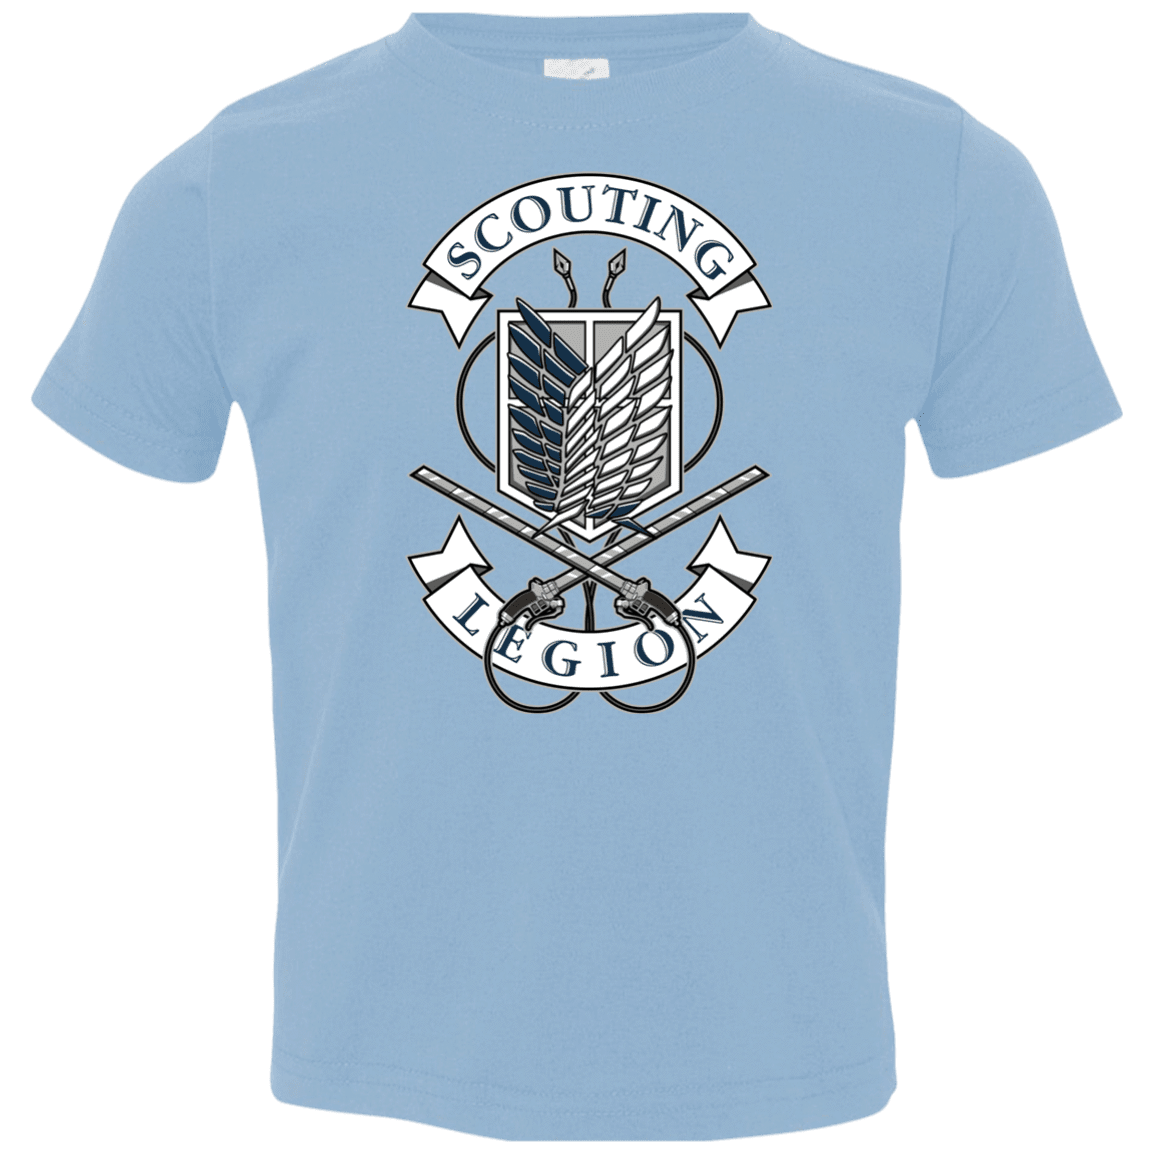 T-Shirts Light Blue / 2T AoT Scouting Legion Toddler Premium T-Shirt